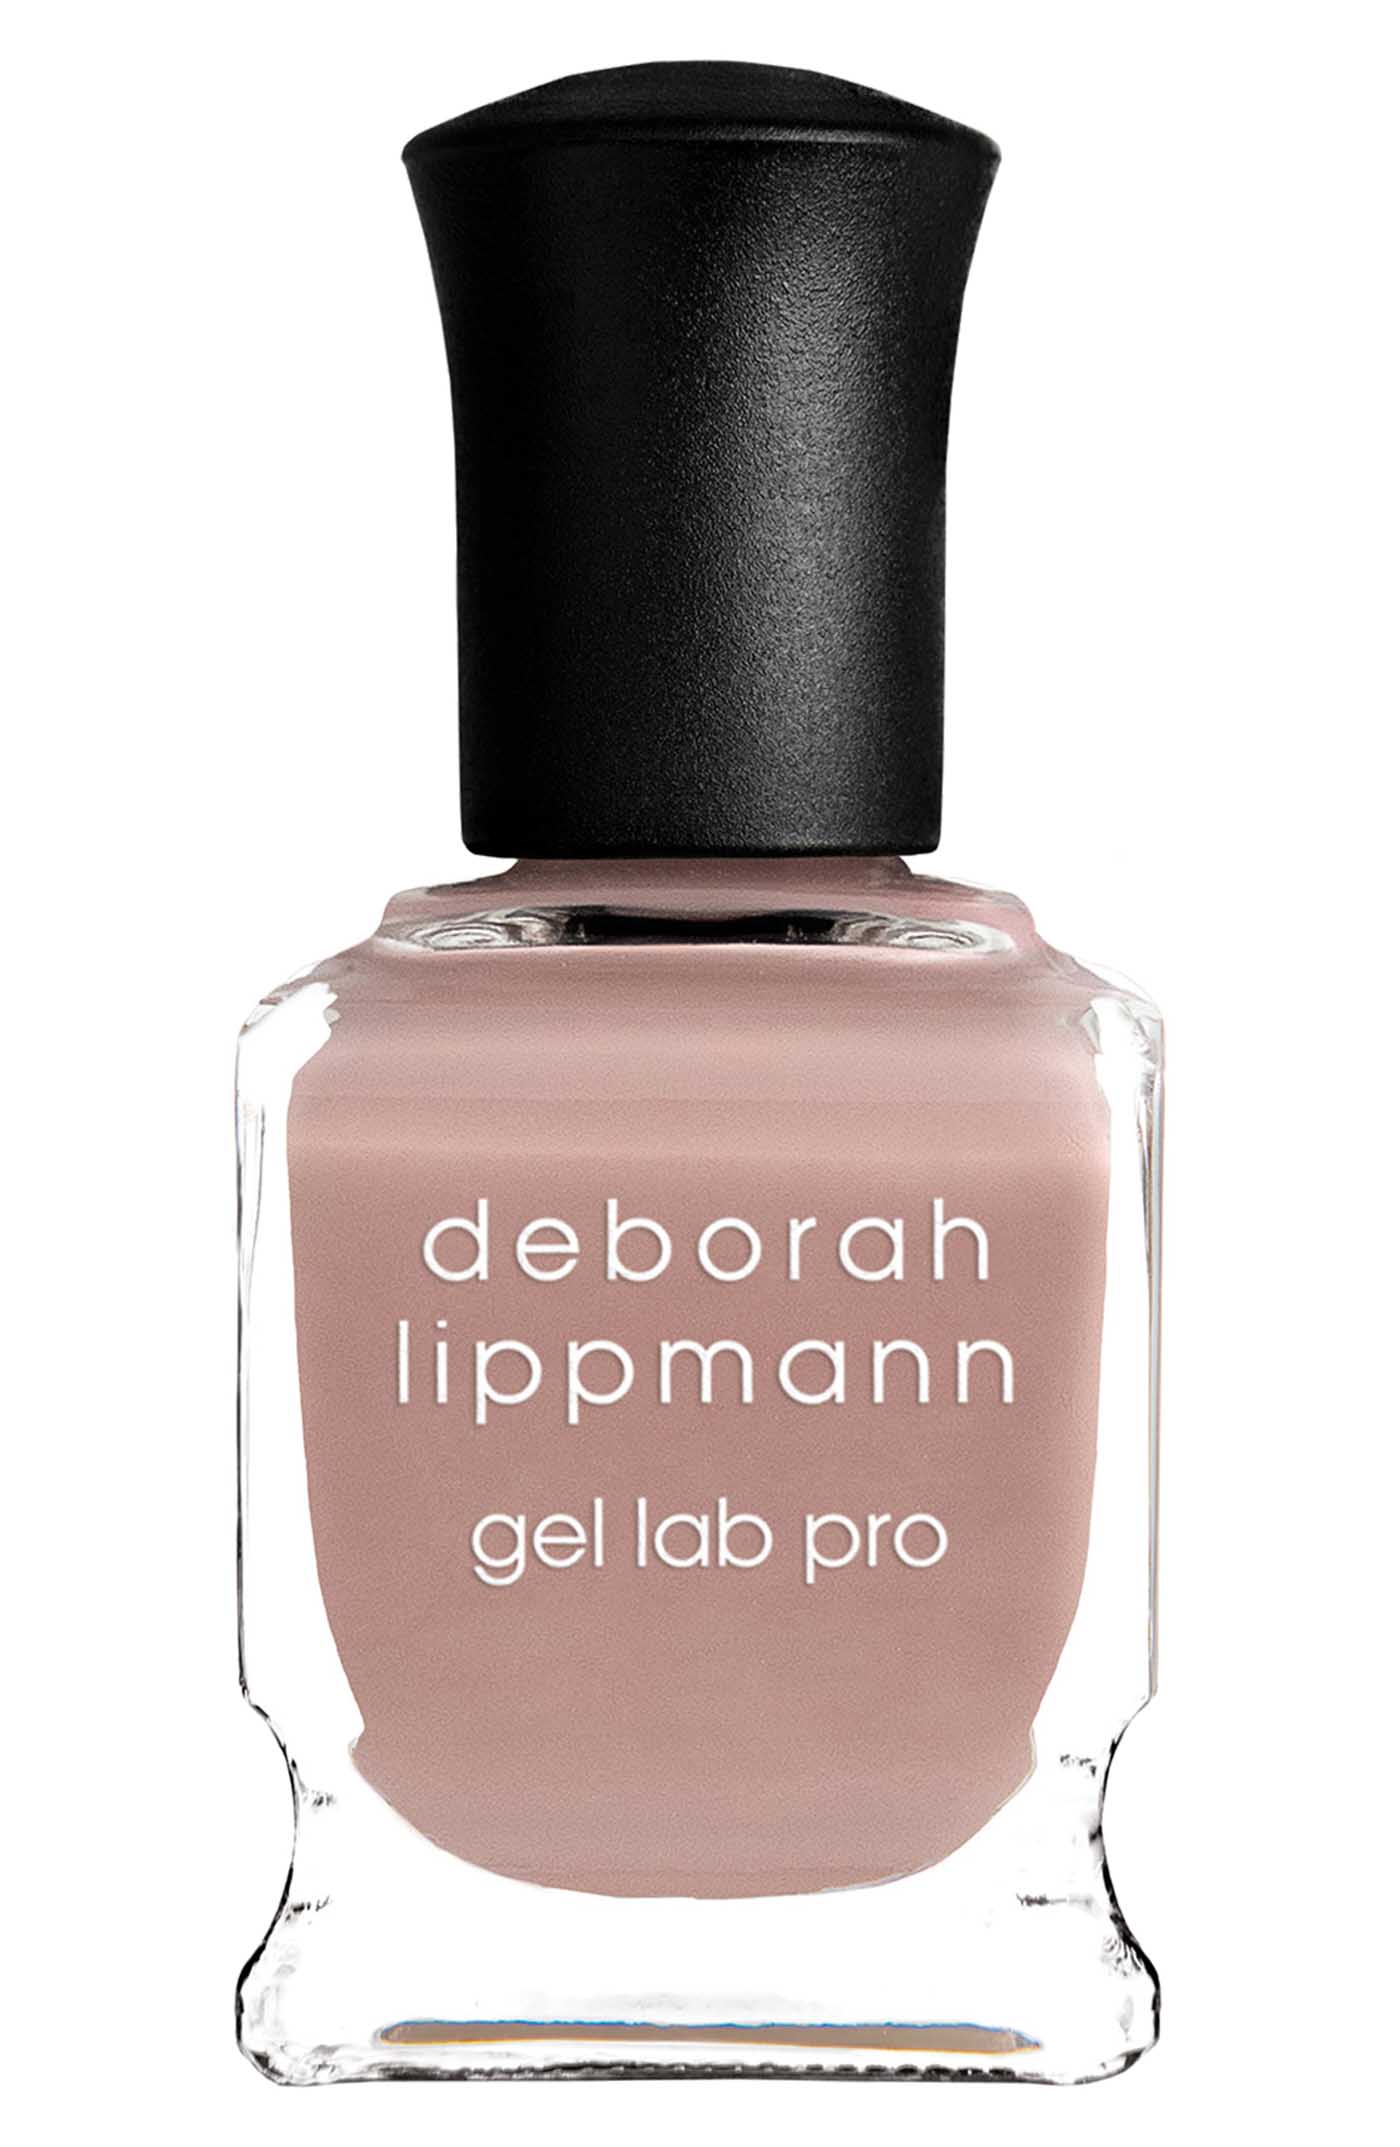 26 Deborah Lippman, Gel Lab Pro Nail Color In Feeling Myself, Nordstrom.com